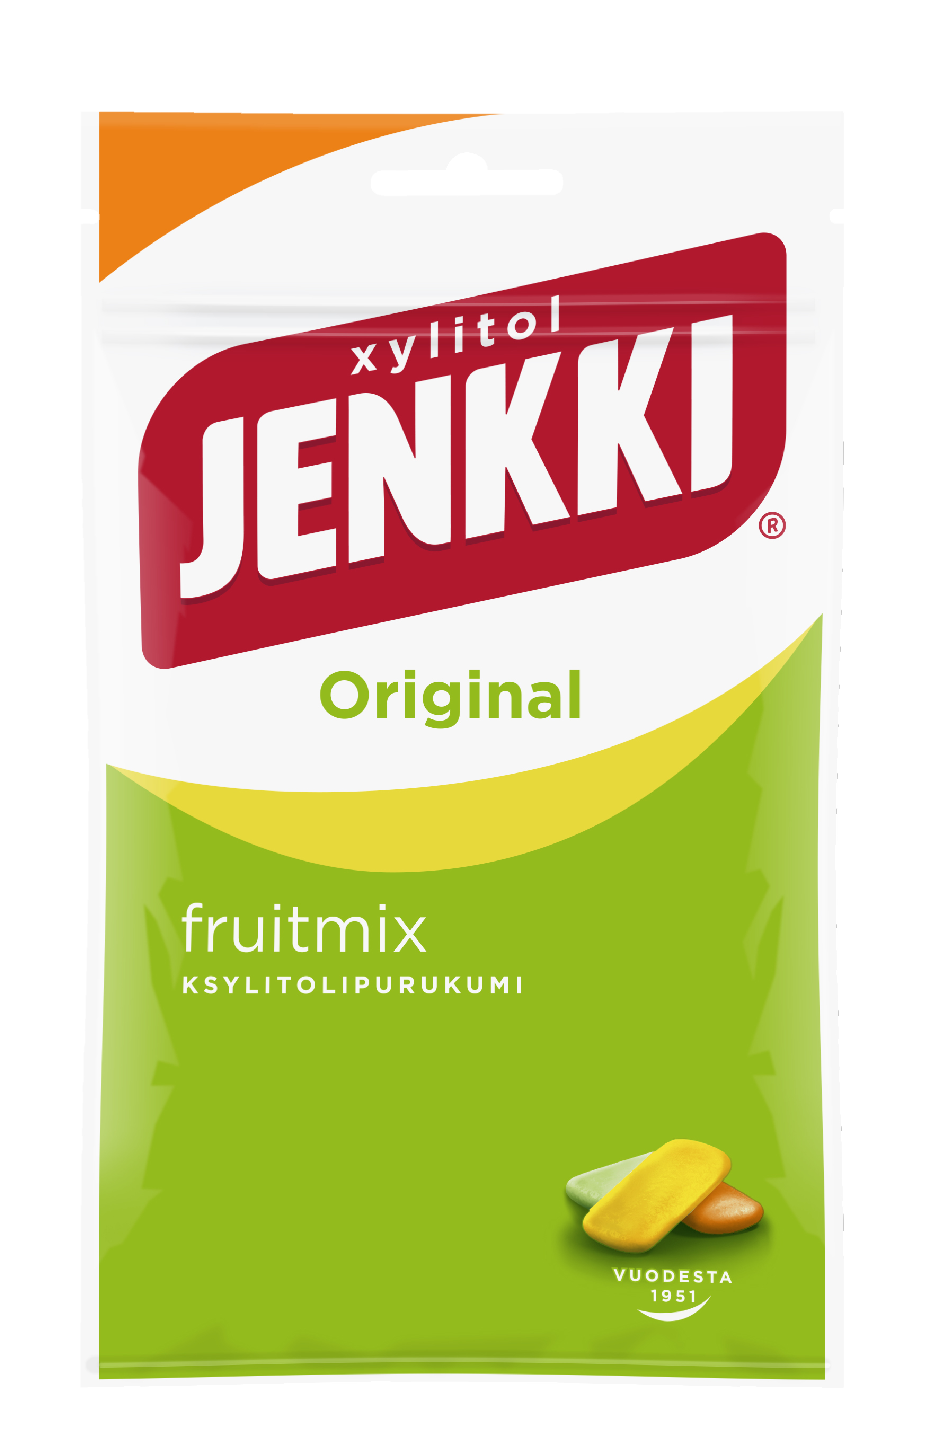 Jenkki Original fruit mix ksylitolipurukumi 100g